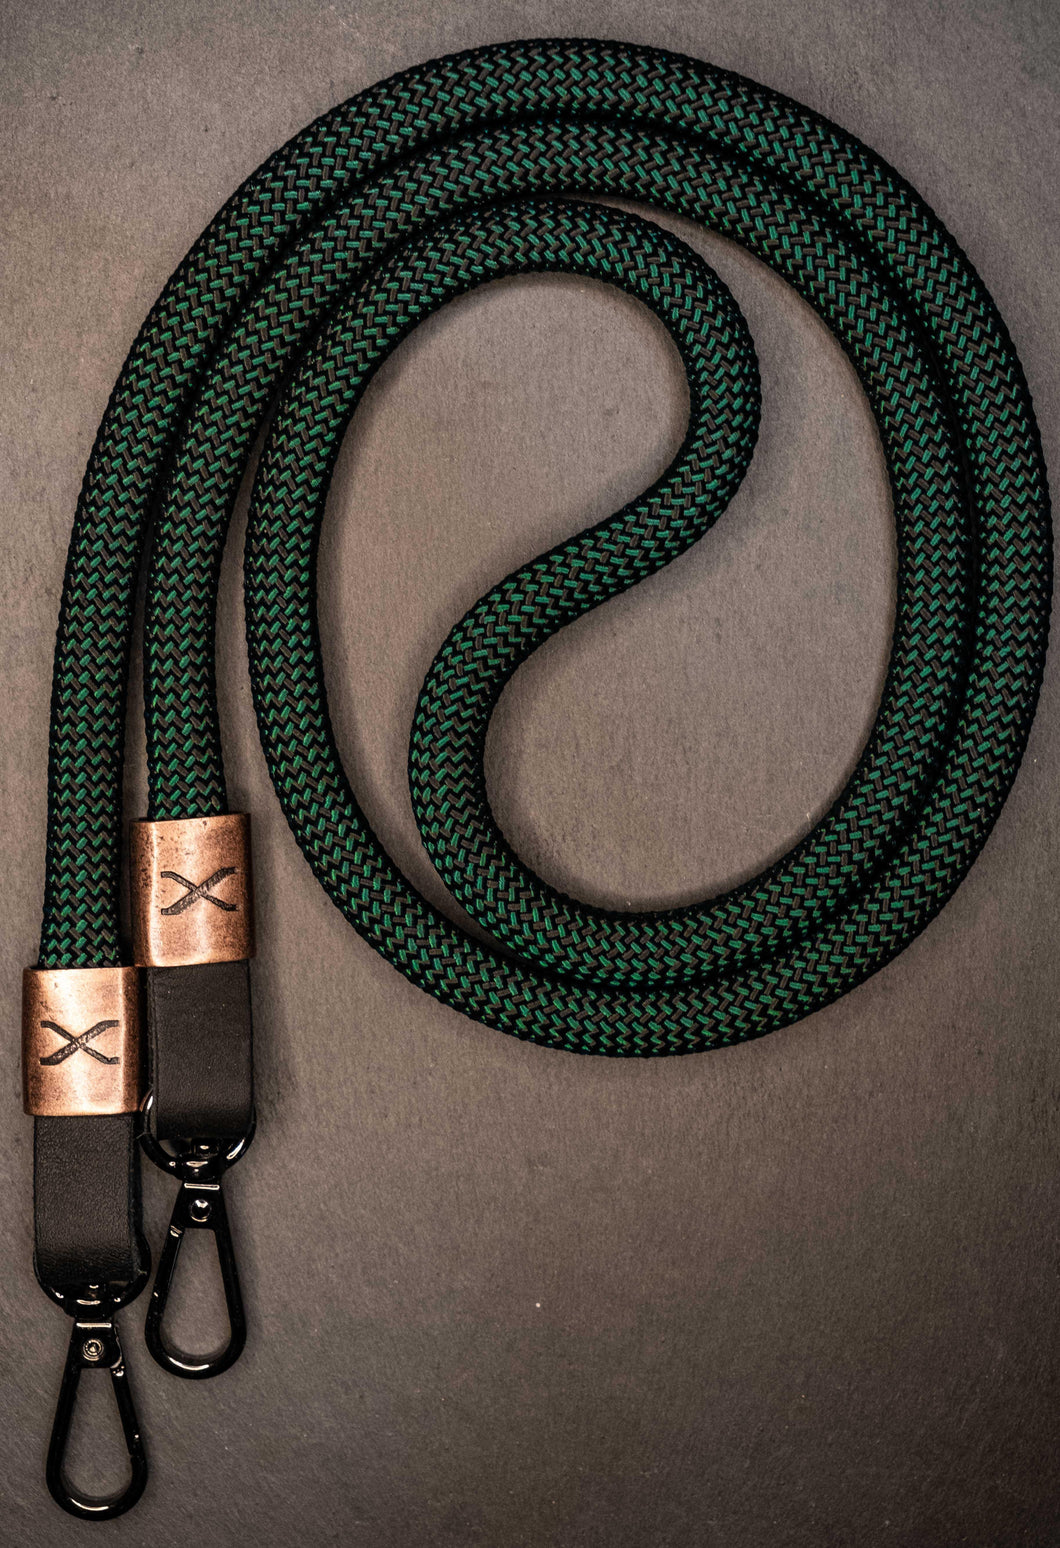 X Checkered Dark Green/Black Rope -Black Leather Camera Strap - Copper X - Hyperion Handmade Camera Straps